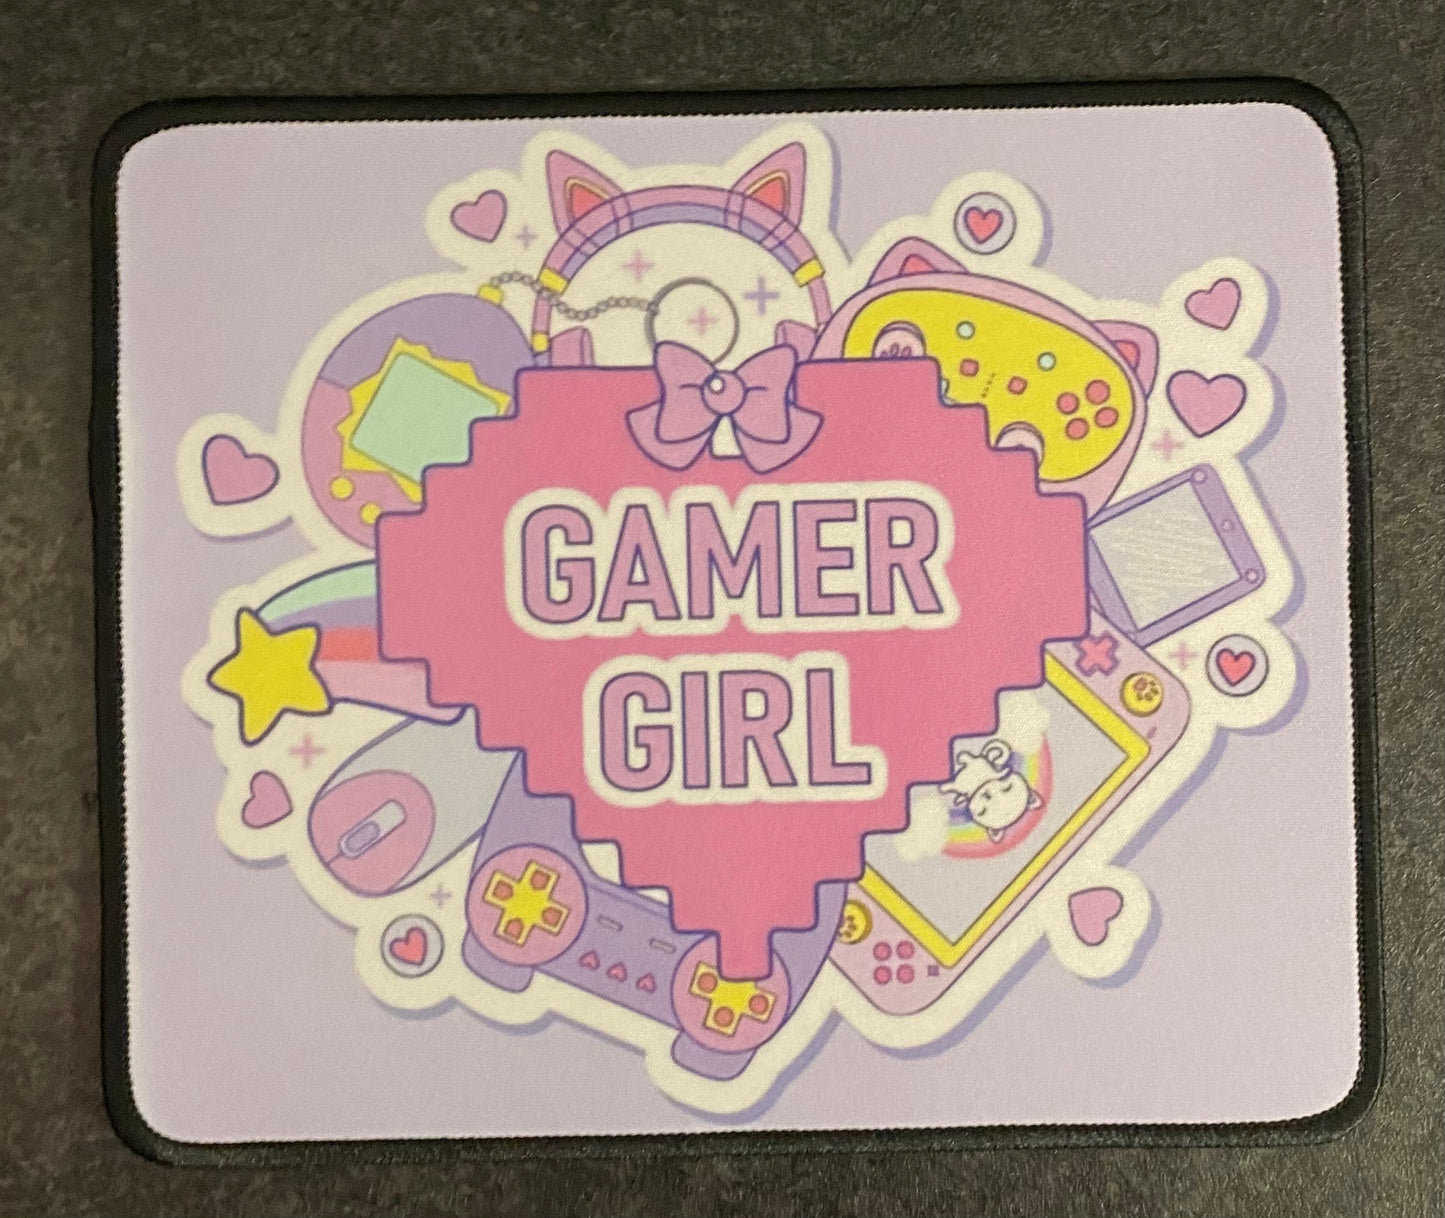 Gamer Girl Design, Fabric Mouse Mat, Desk Saver, Gamer, Work, Computer